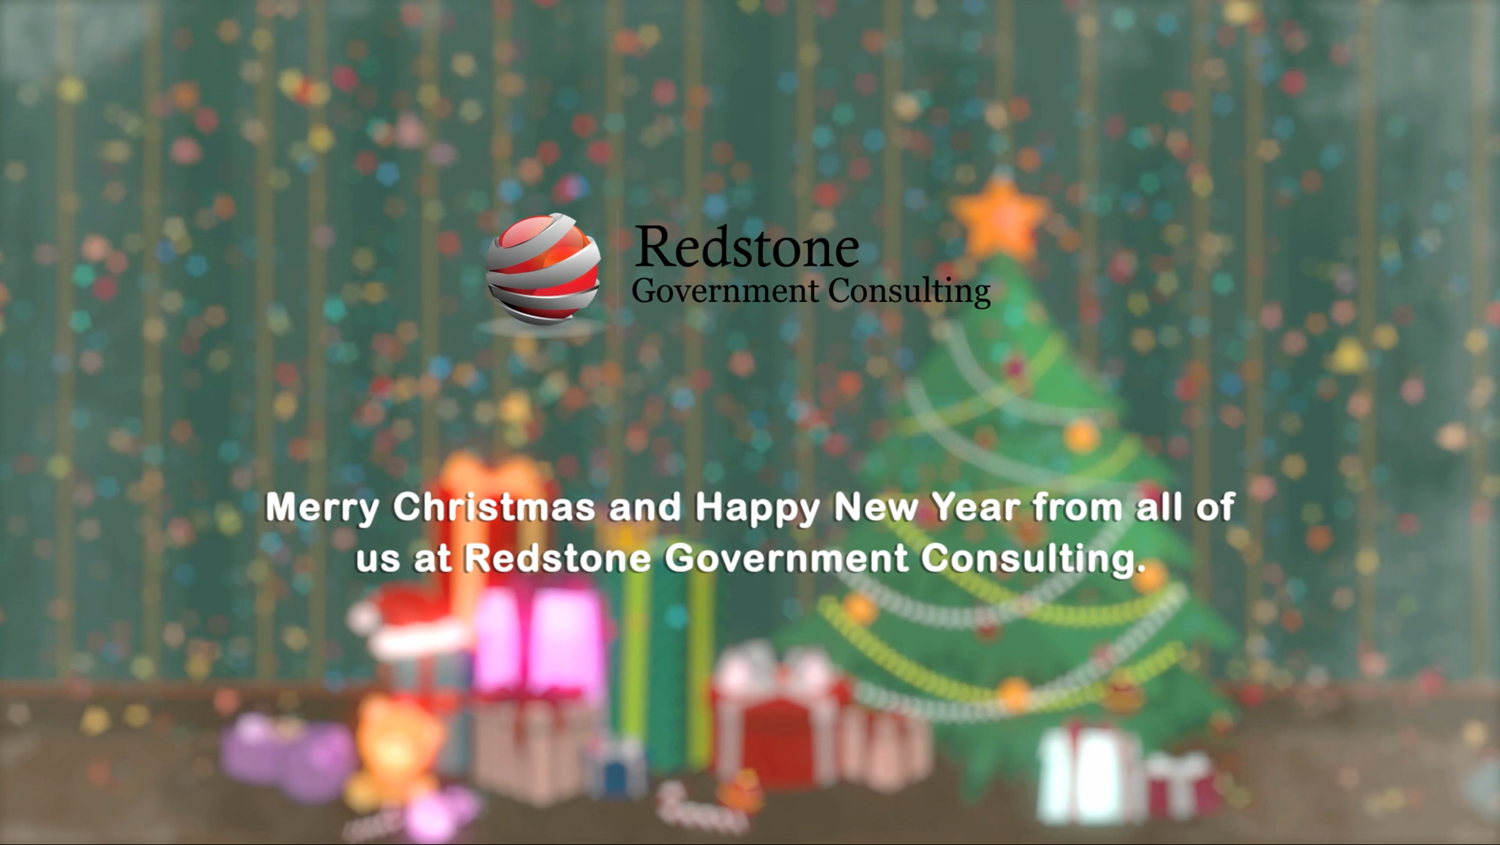 Merry Christmas from Redstone GCI - Redstone gci